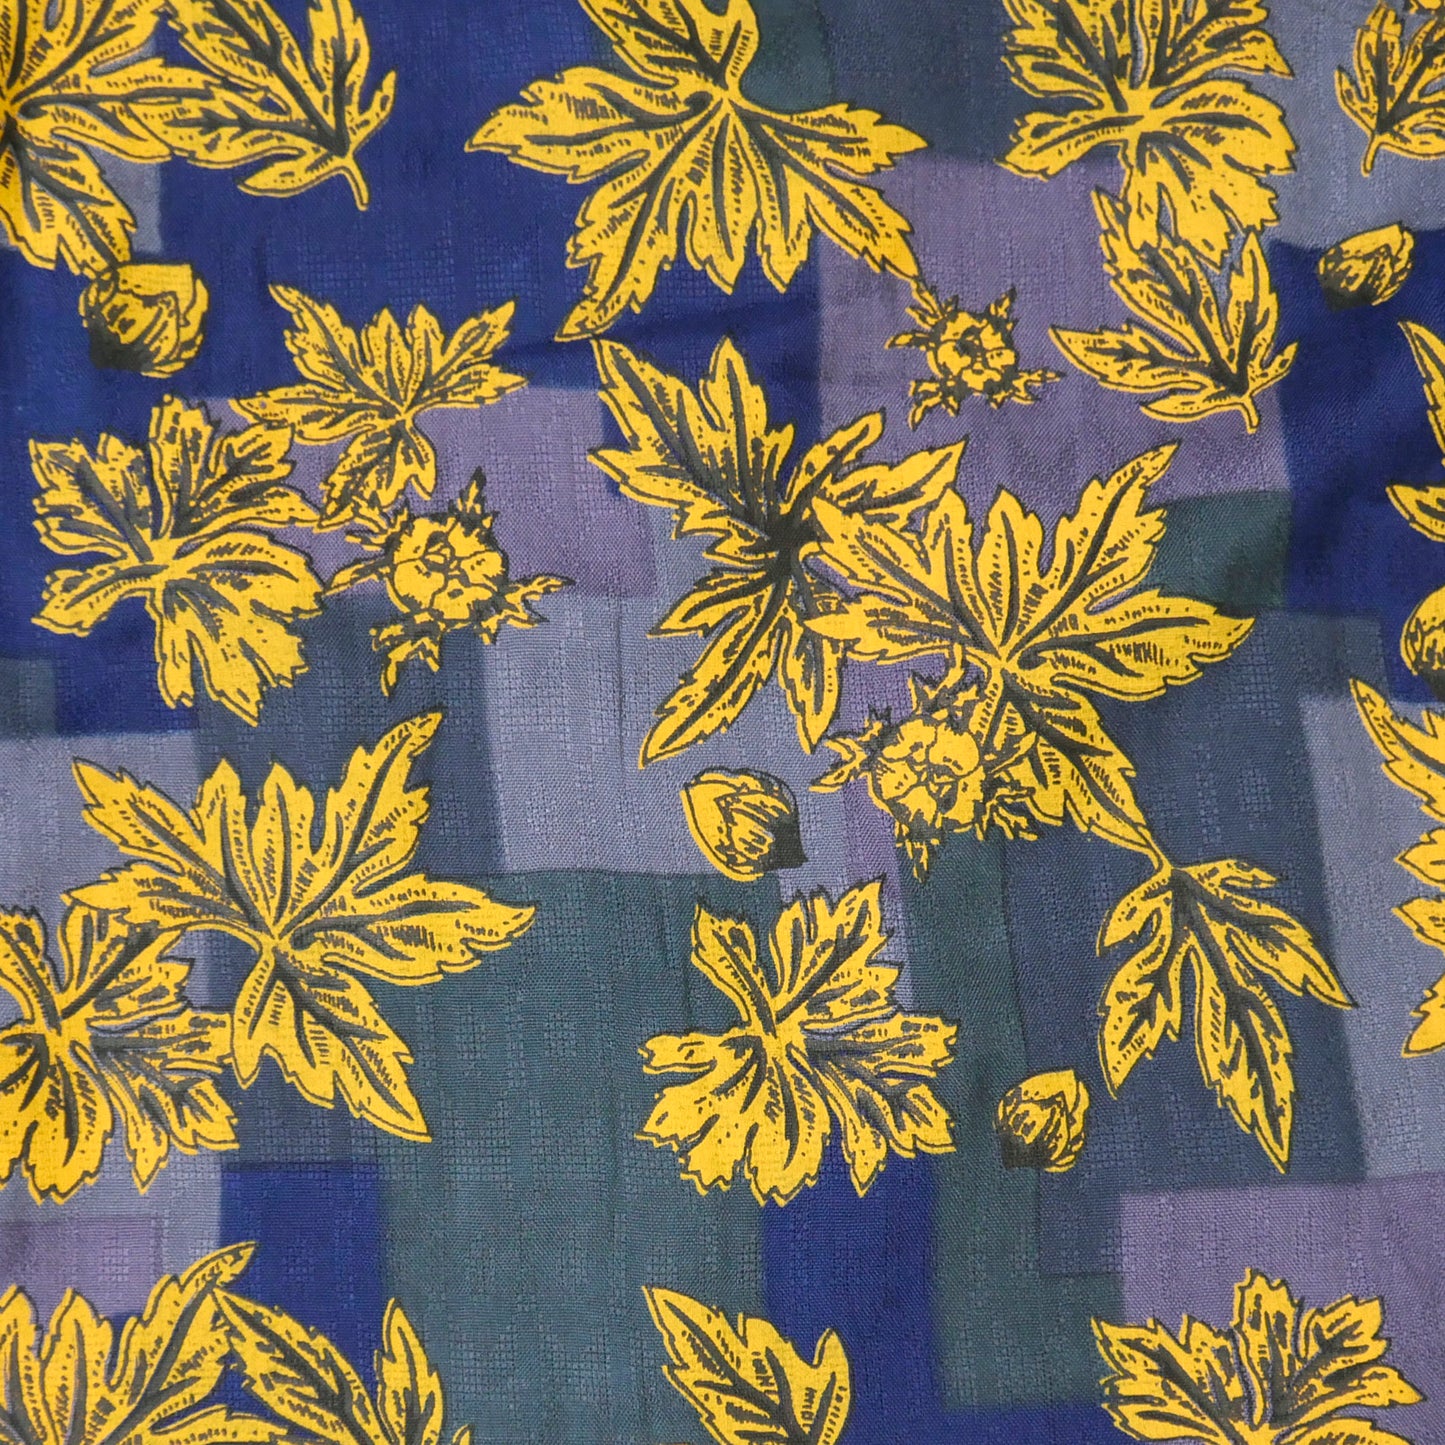 Rayon Jacquard Lace Flower Print na Damit na Pantaas